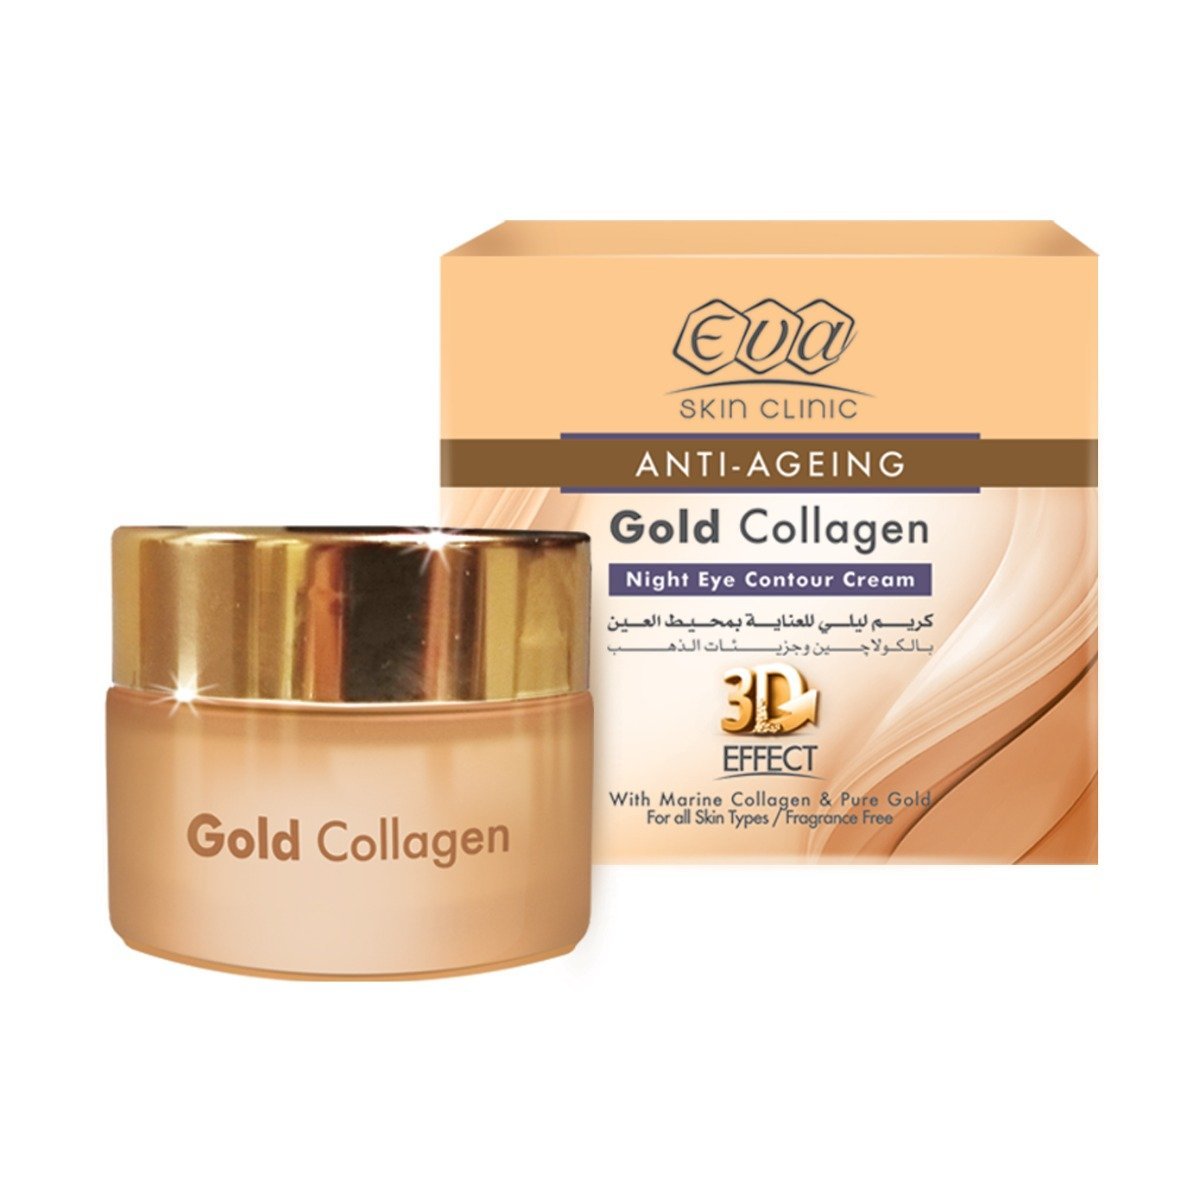 Eva Skin Clinic Gold Collagen Night Eye Contour Cream - 15ml - Bloom Pharmacy